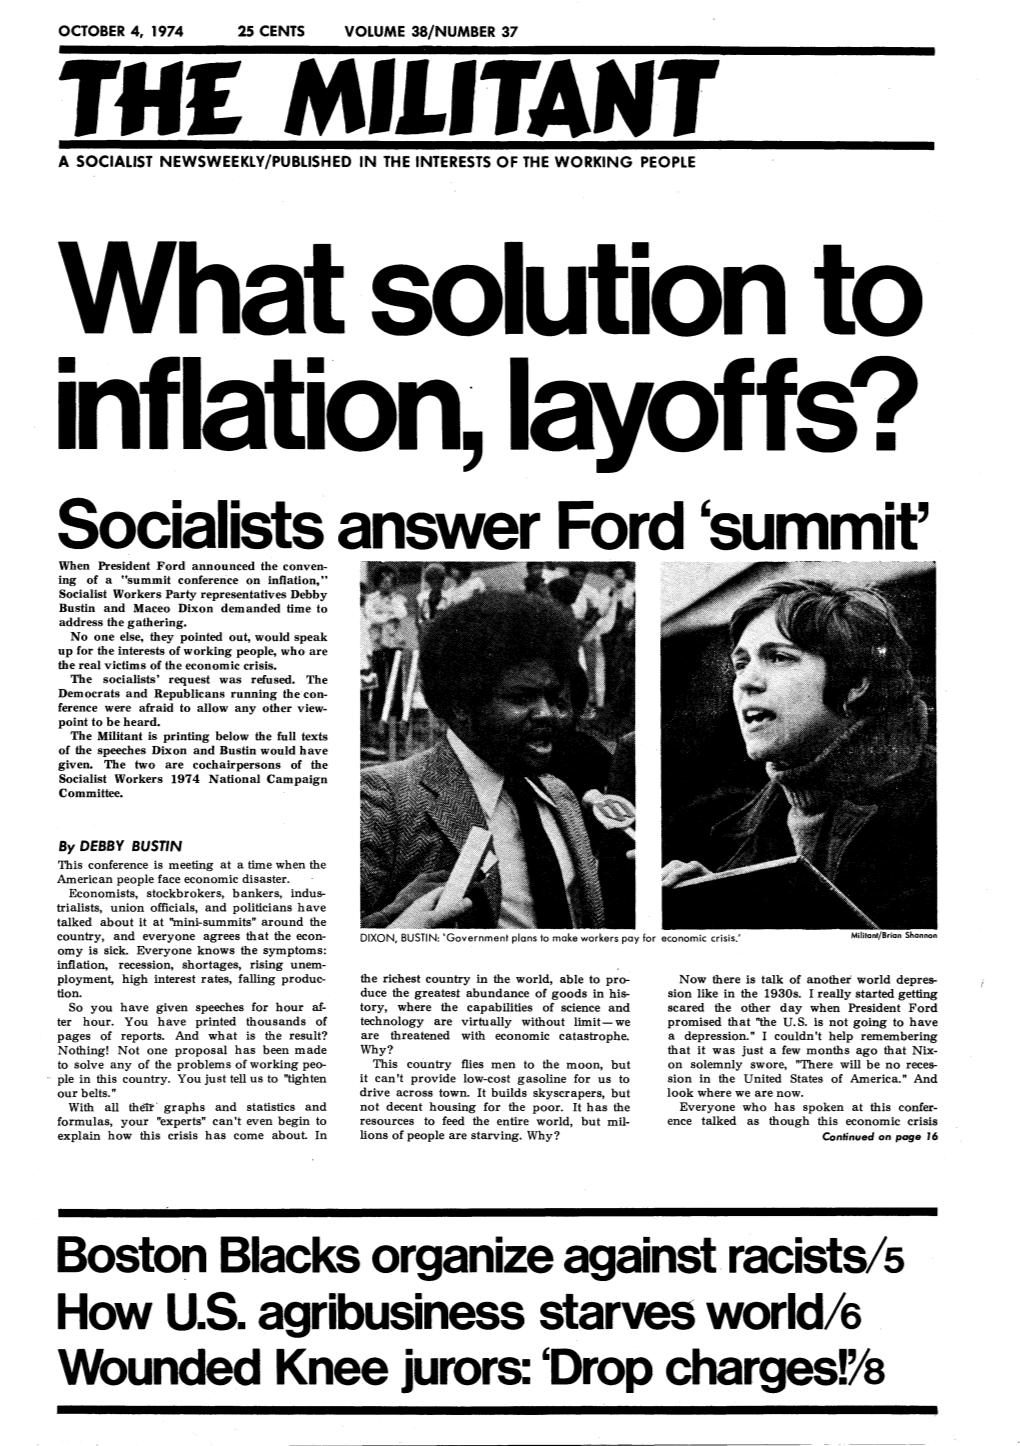 Socialists Answer Ford 'Summit'